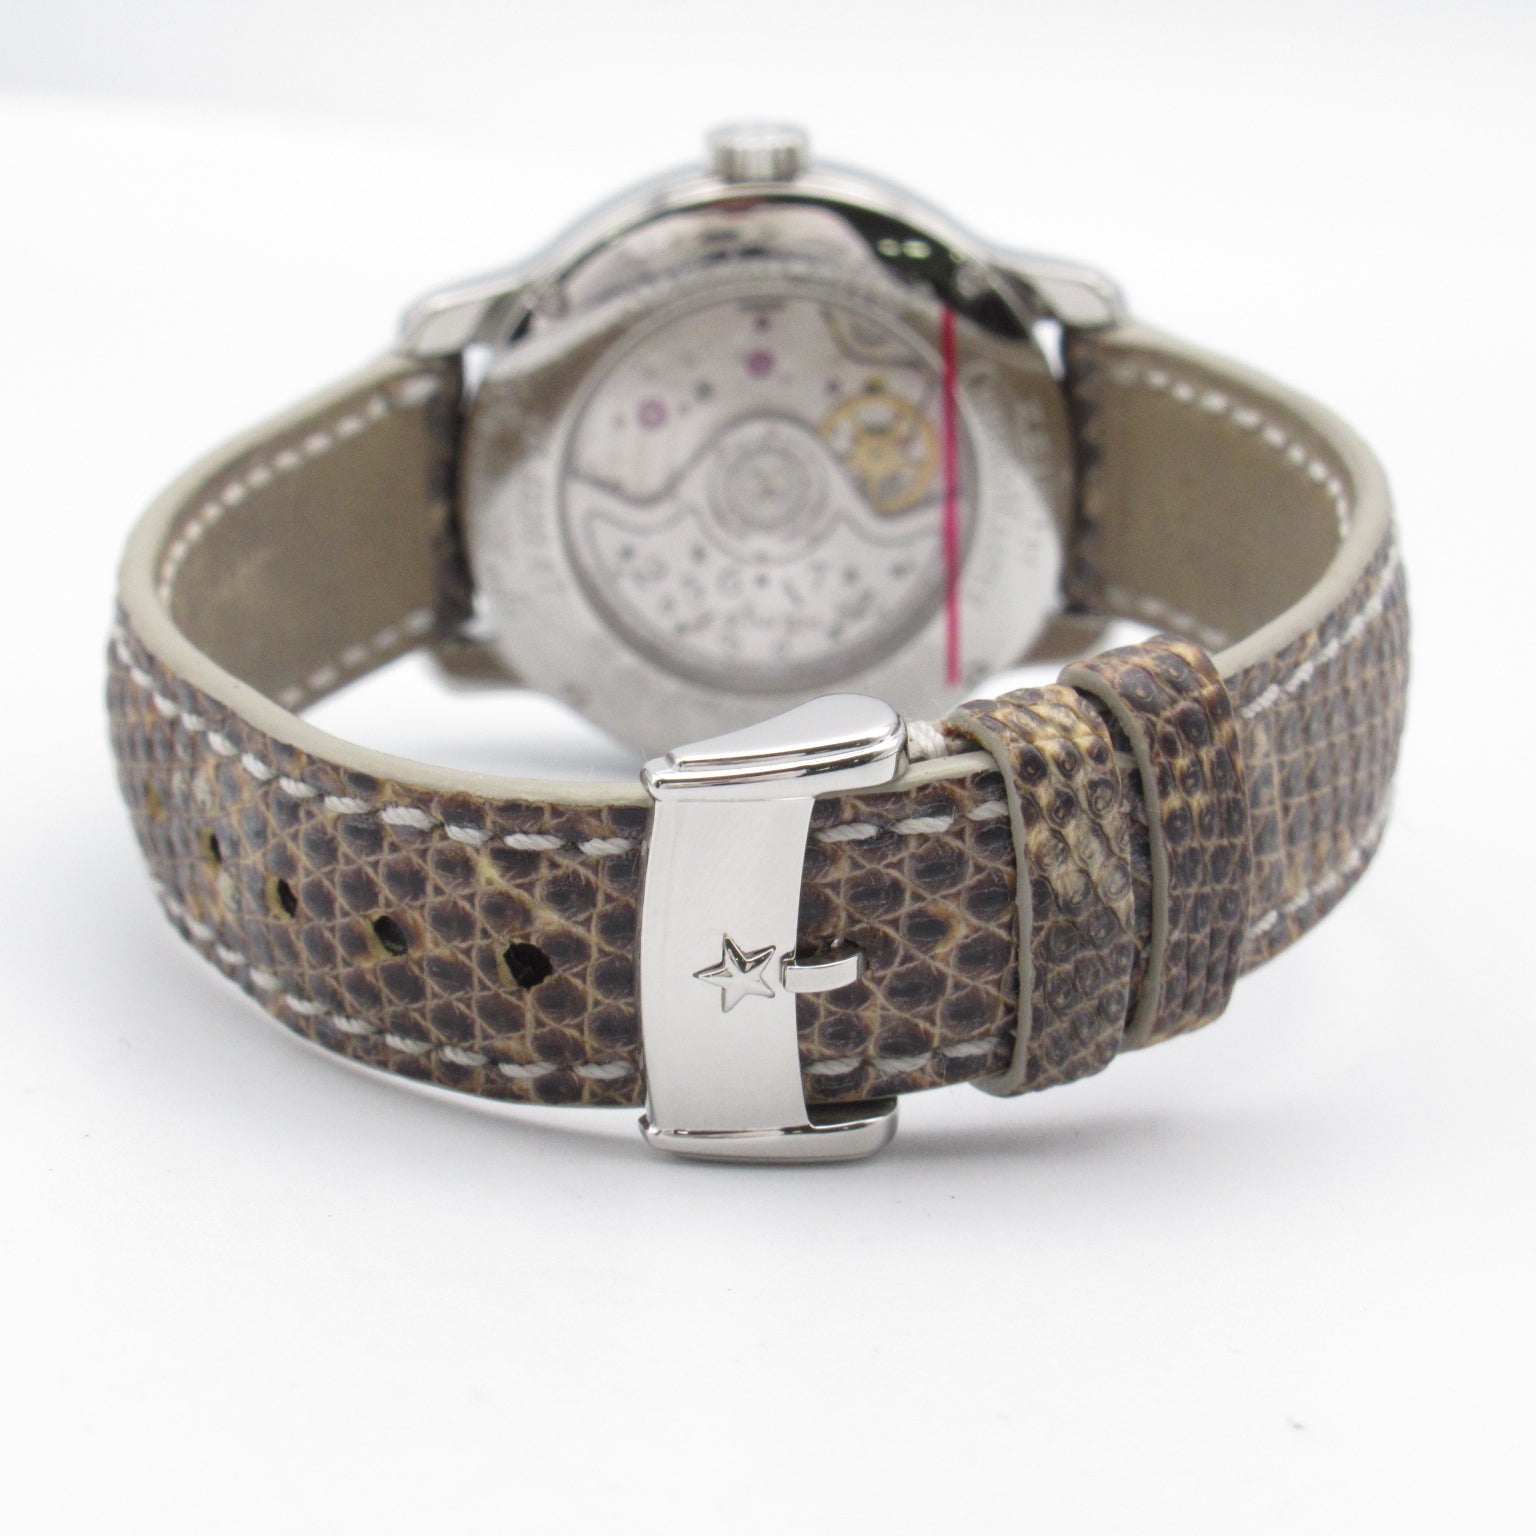 Zenith Elite Diamond Basel Watch Watch Stainless Steel Leather Belt Leather  Silver  16.1220.67